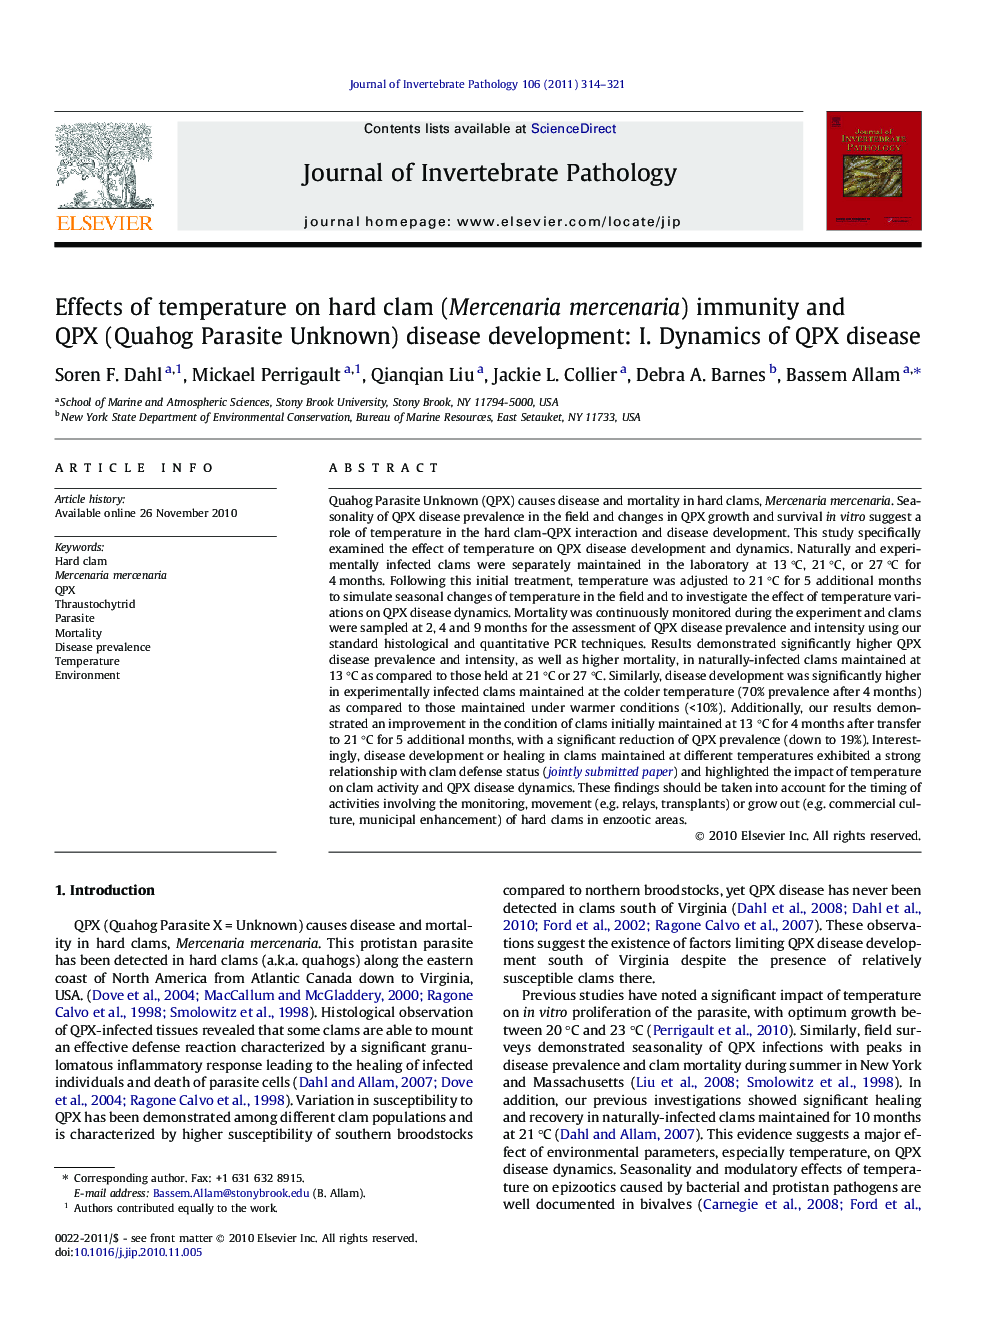 Effects of temperature on hard clam (Mercenariamercenaria) immunity and QPX (Quahog Parasite Unknown) disease development: I. Dynamics of QPX disease